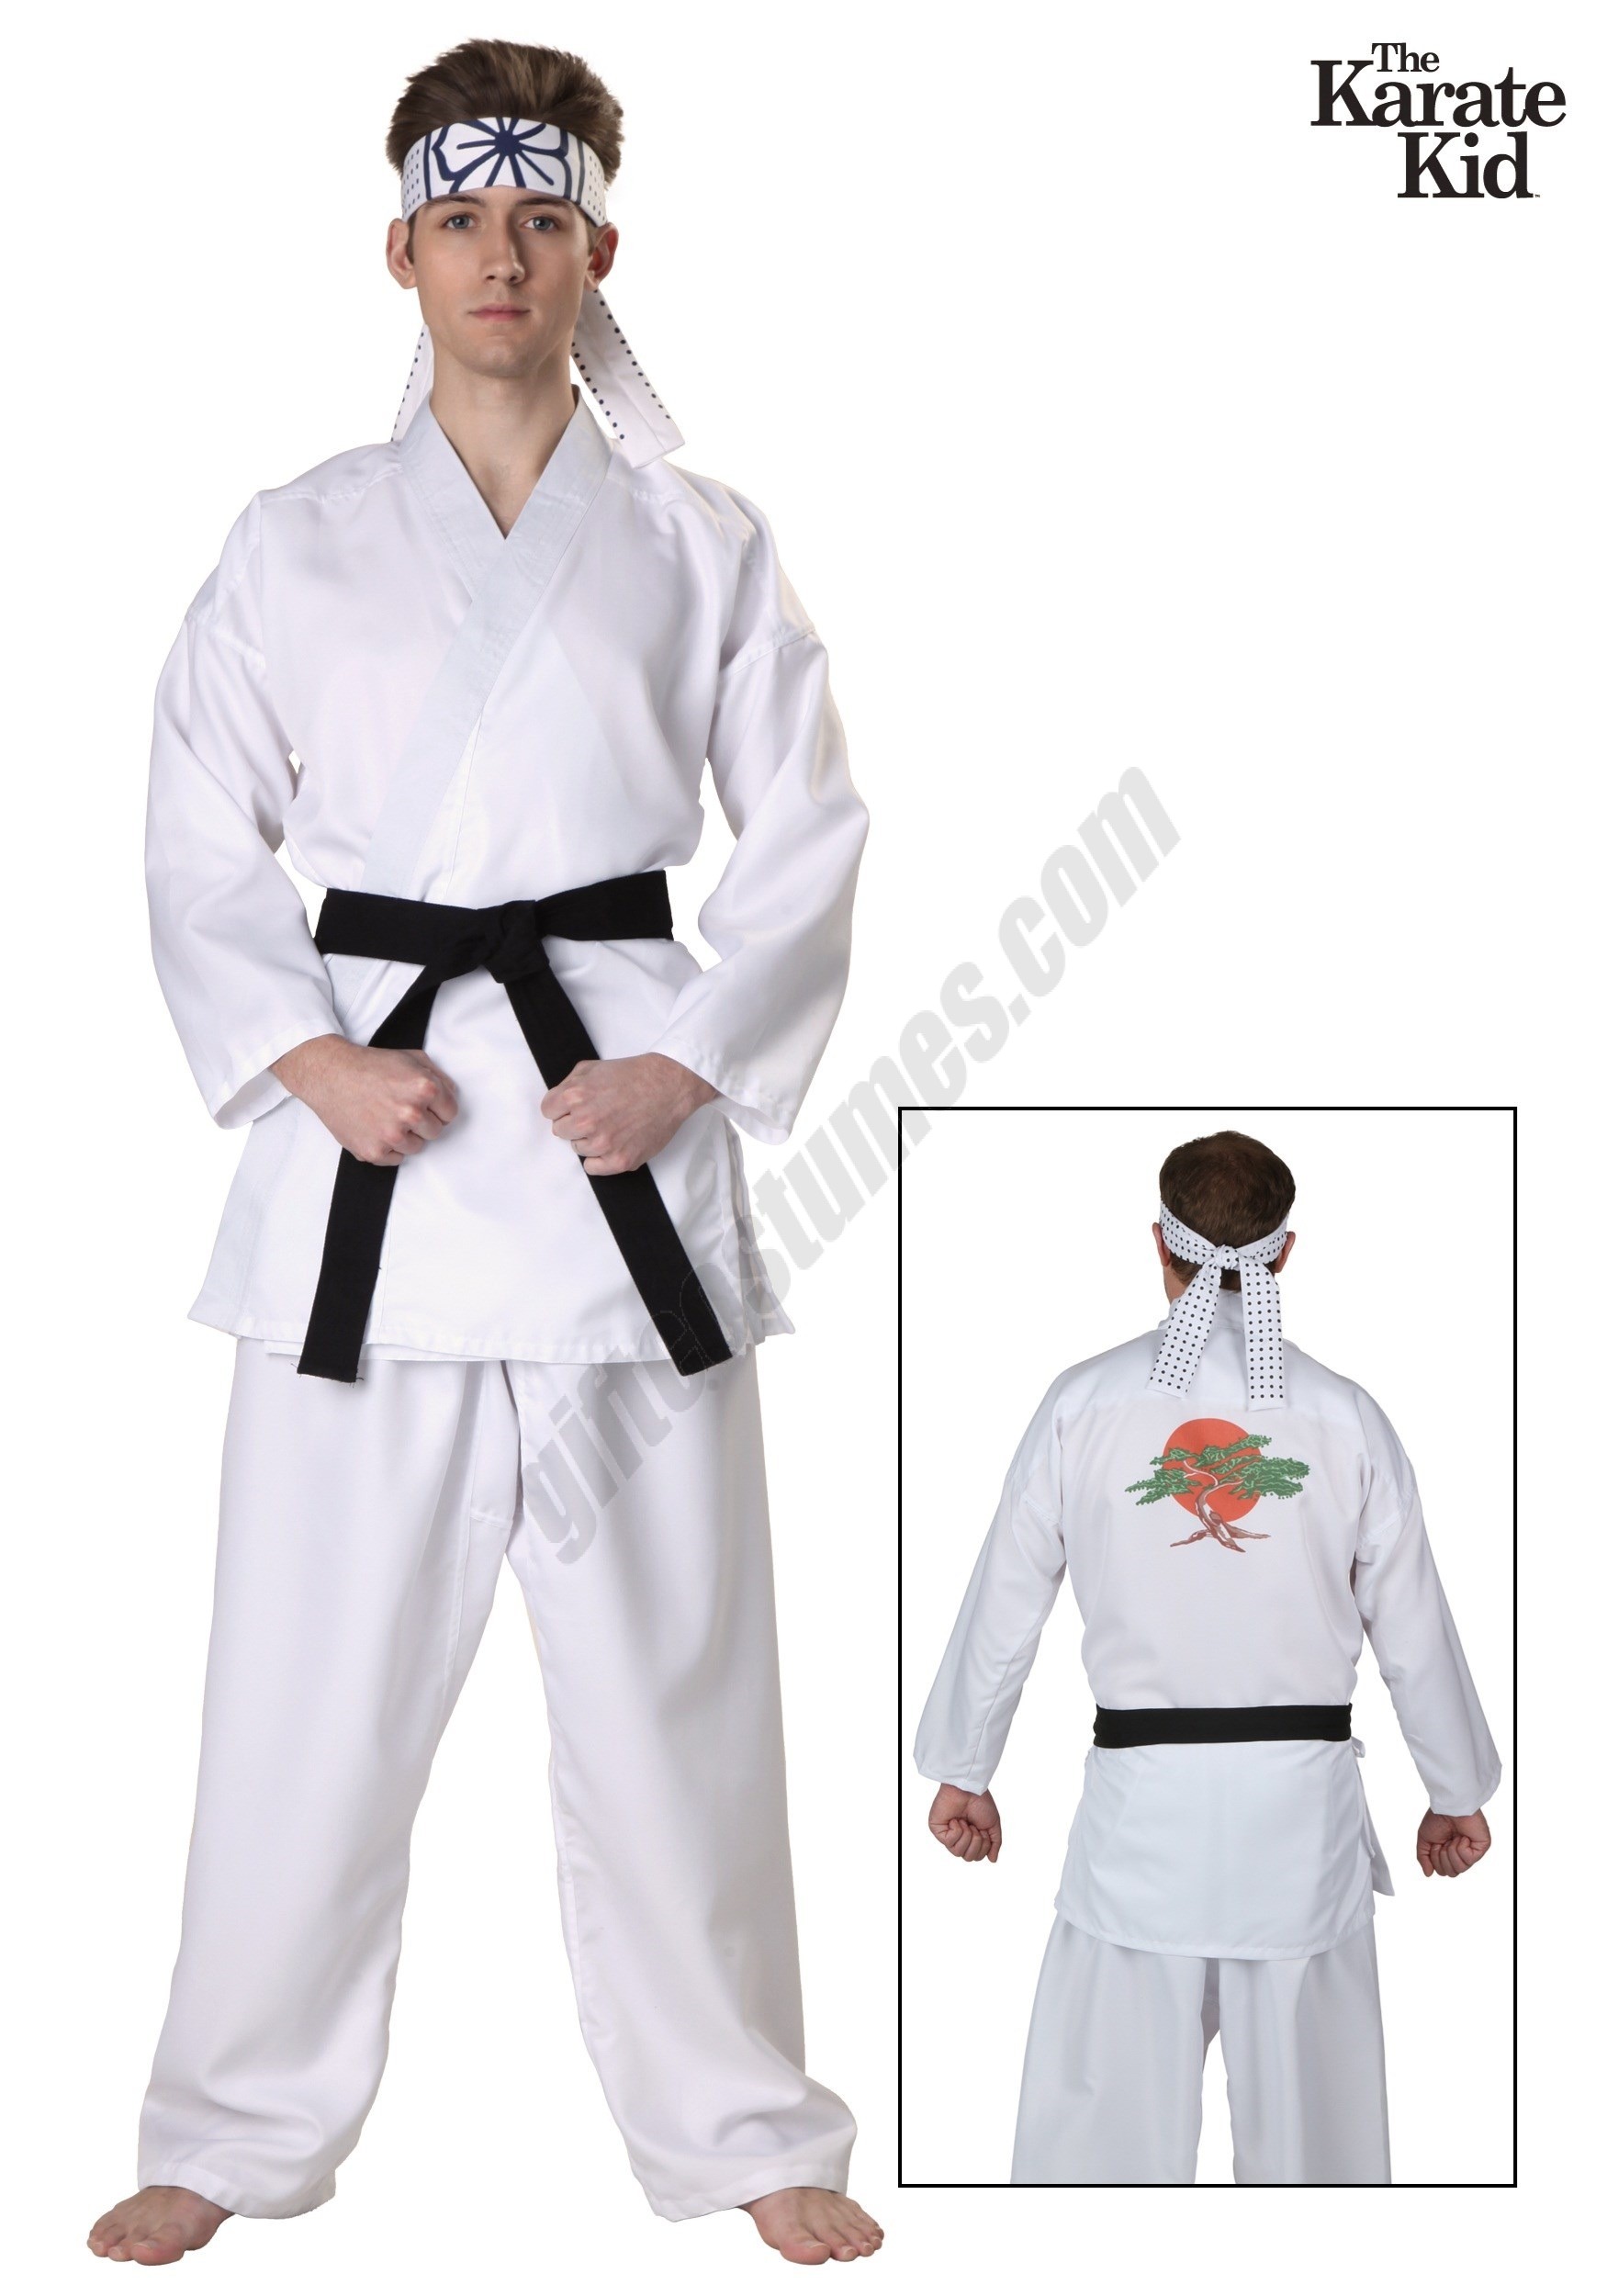 Karate Kid Men's Plus Size Daniel San Costume Promotions - Karate Kid Men's Plus Size Daniel San Costume Promotions